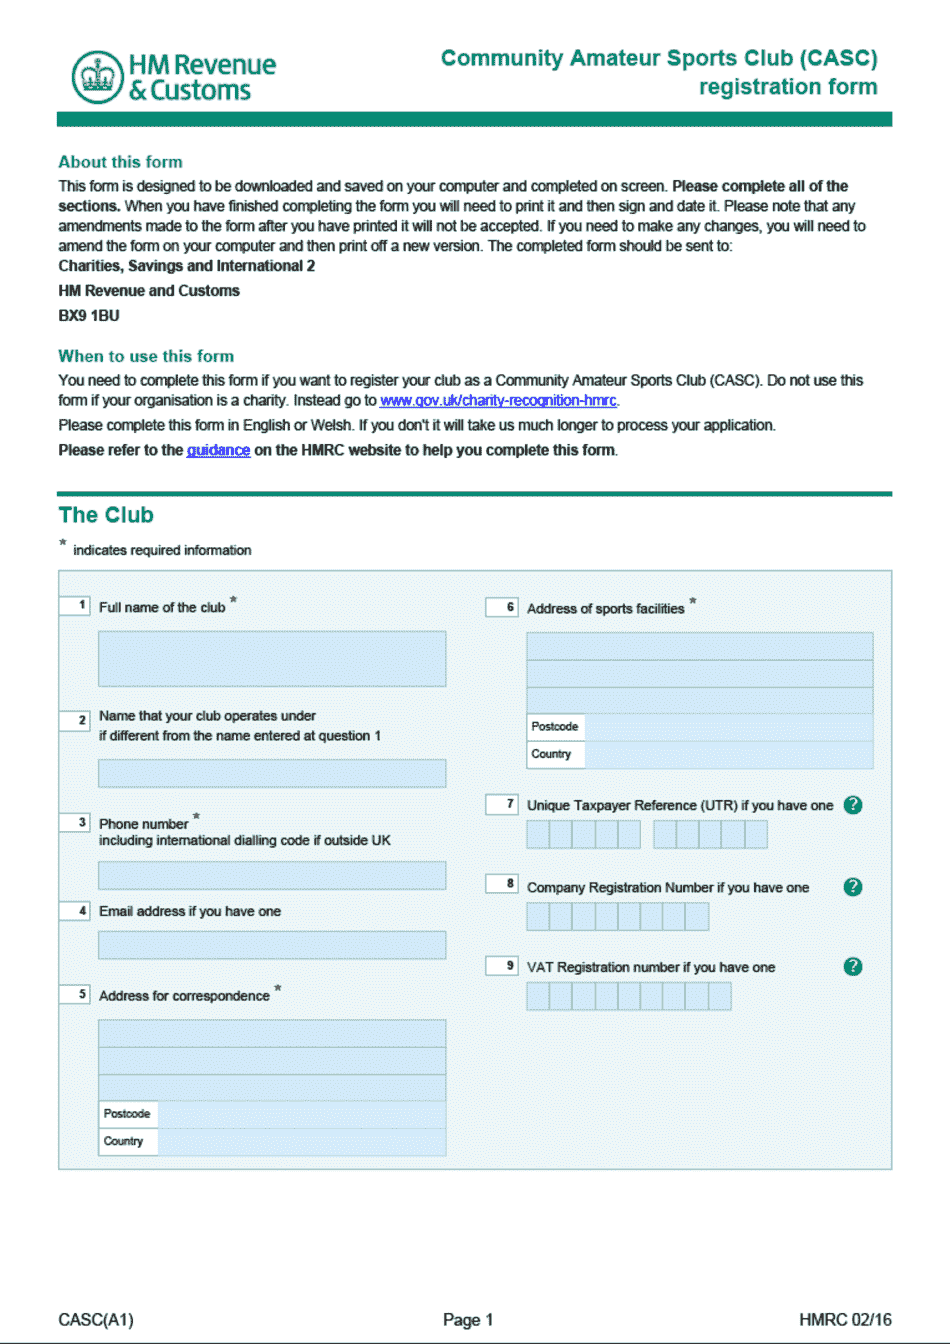 Form A1 Community Amateur Sports Club (CASC) Registration Form - United Kingdom, Page 1